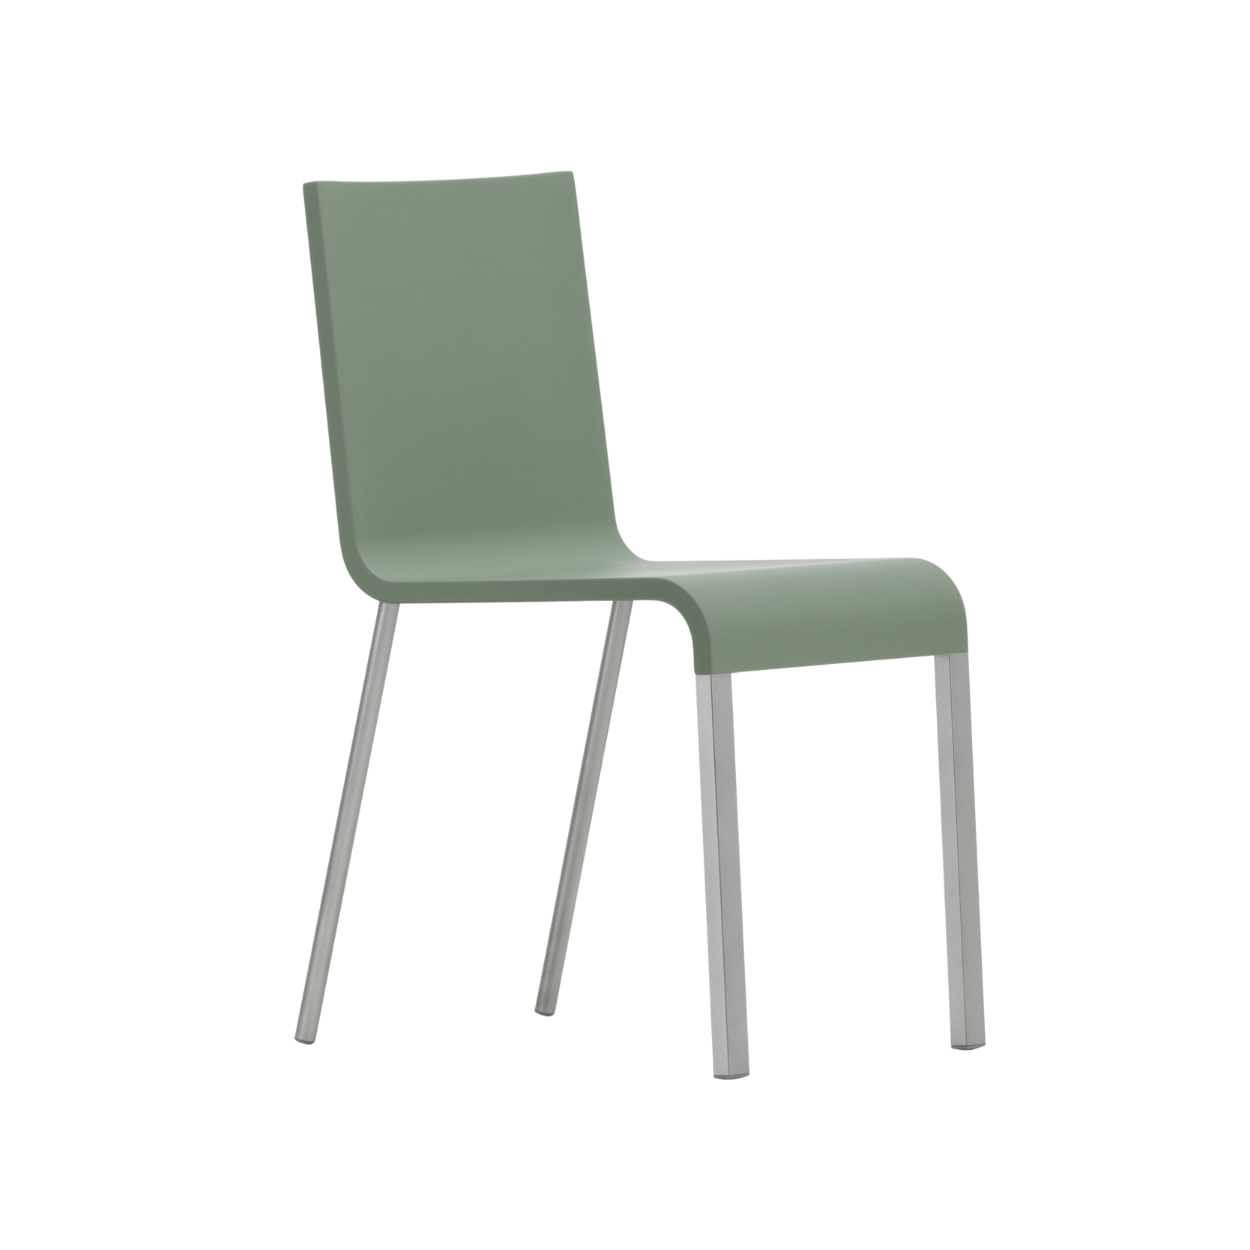 .03 Non-Stackable Chair